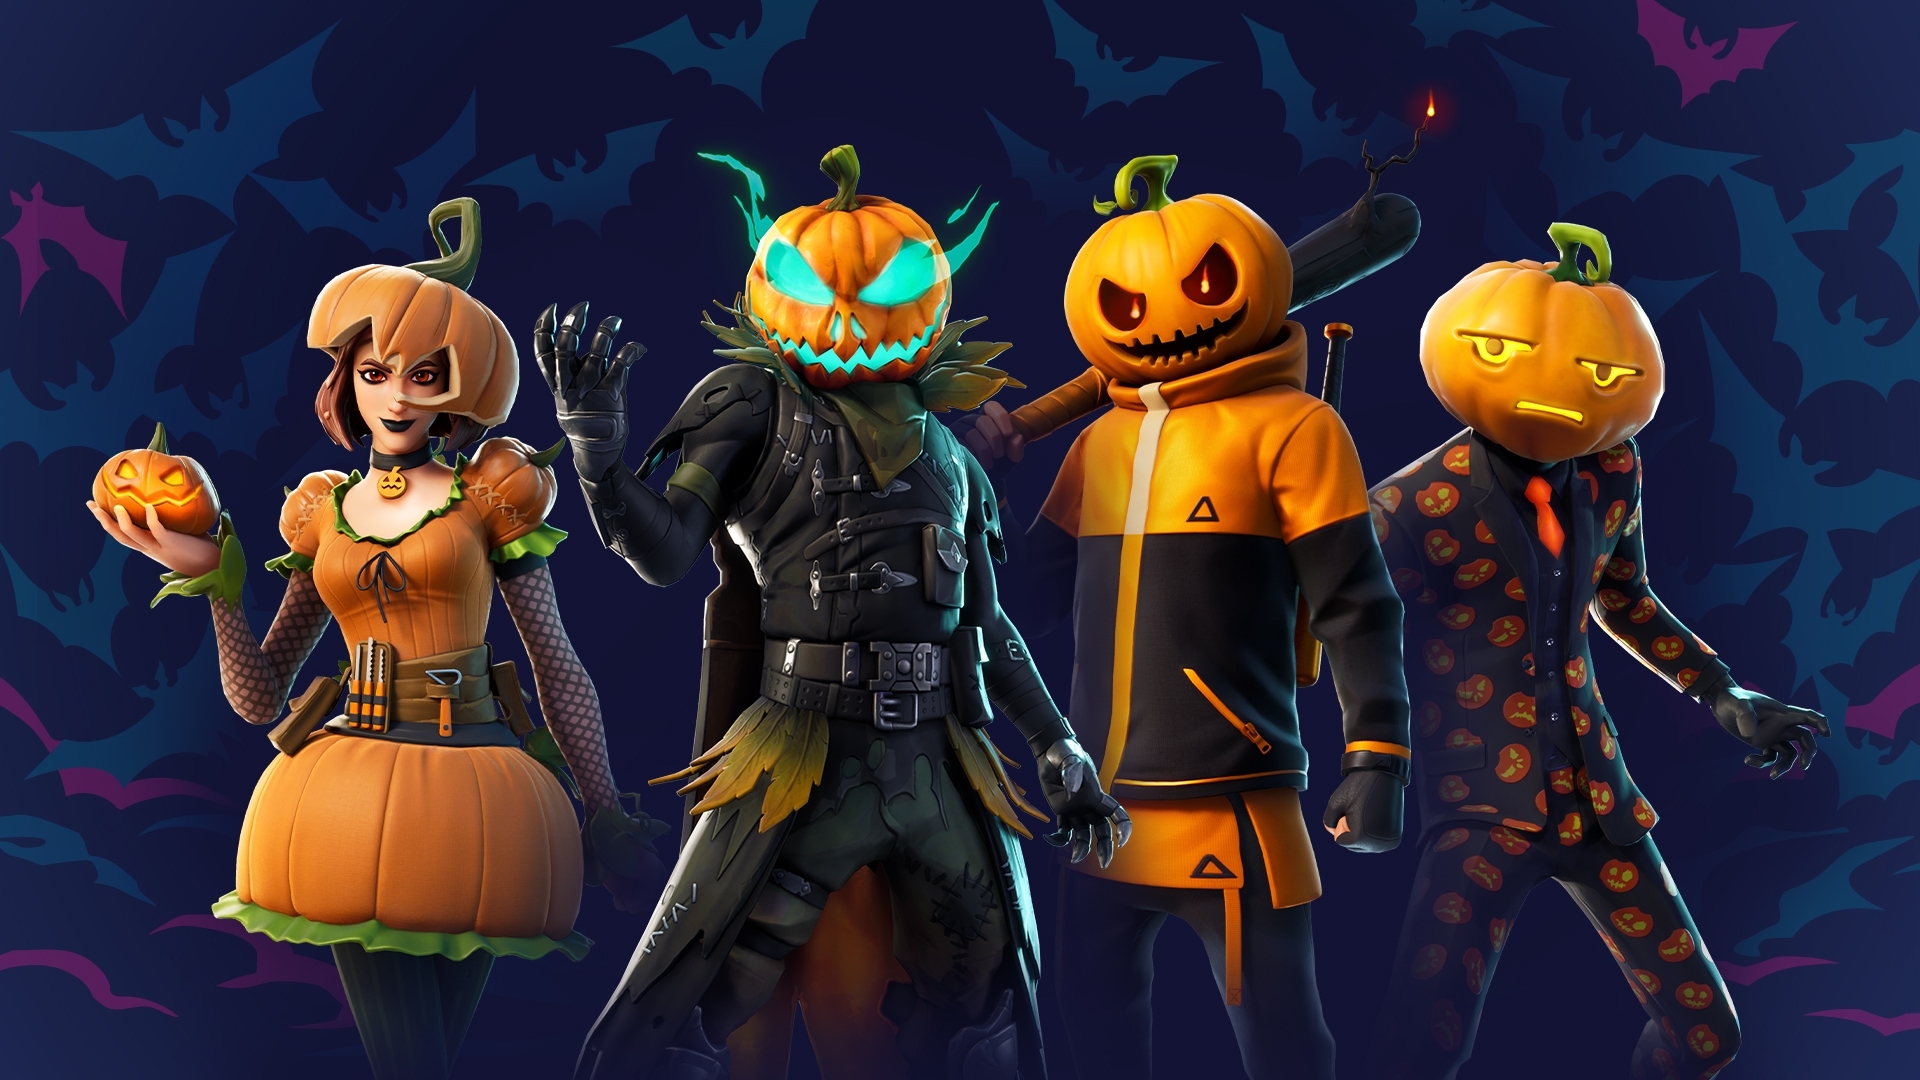 Fortnite Halloween Pumpkin Wallpaper, HD Games 4K Wallpapers, Images,  Photos and Background - Wallpapers Den